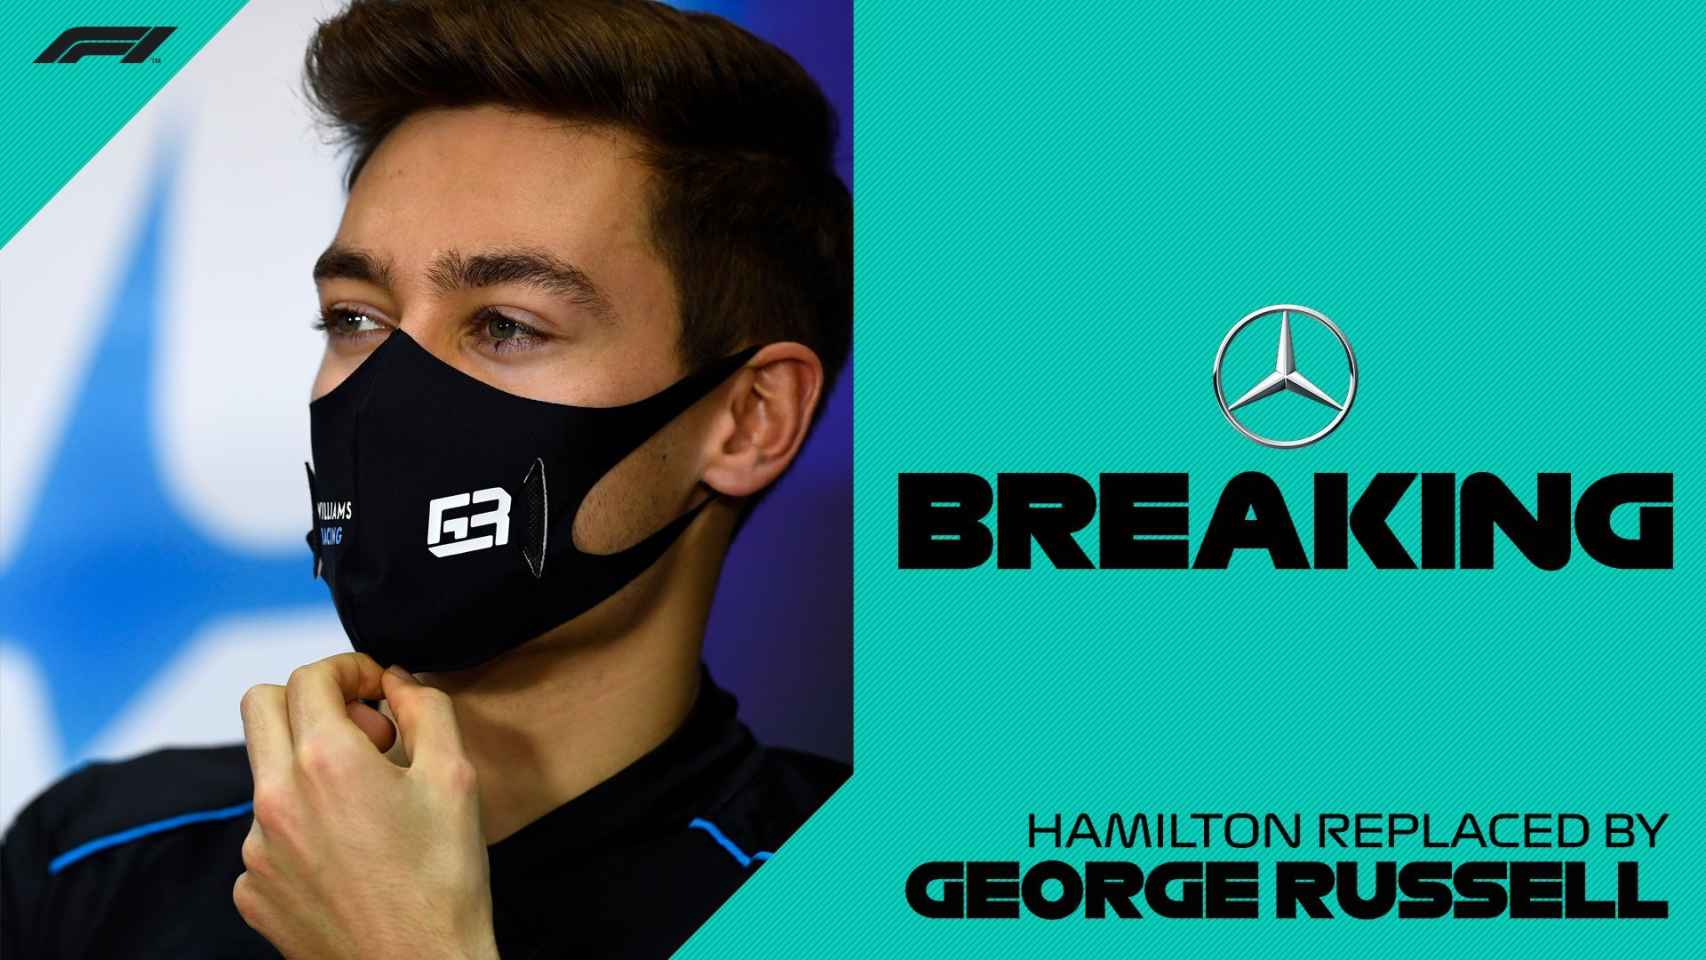 George Russell sustituirá a Hamilton en el GP de Sakhir